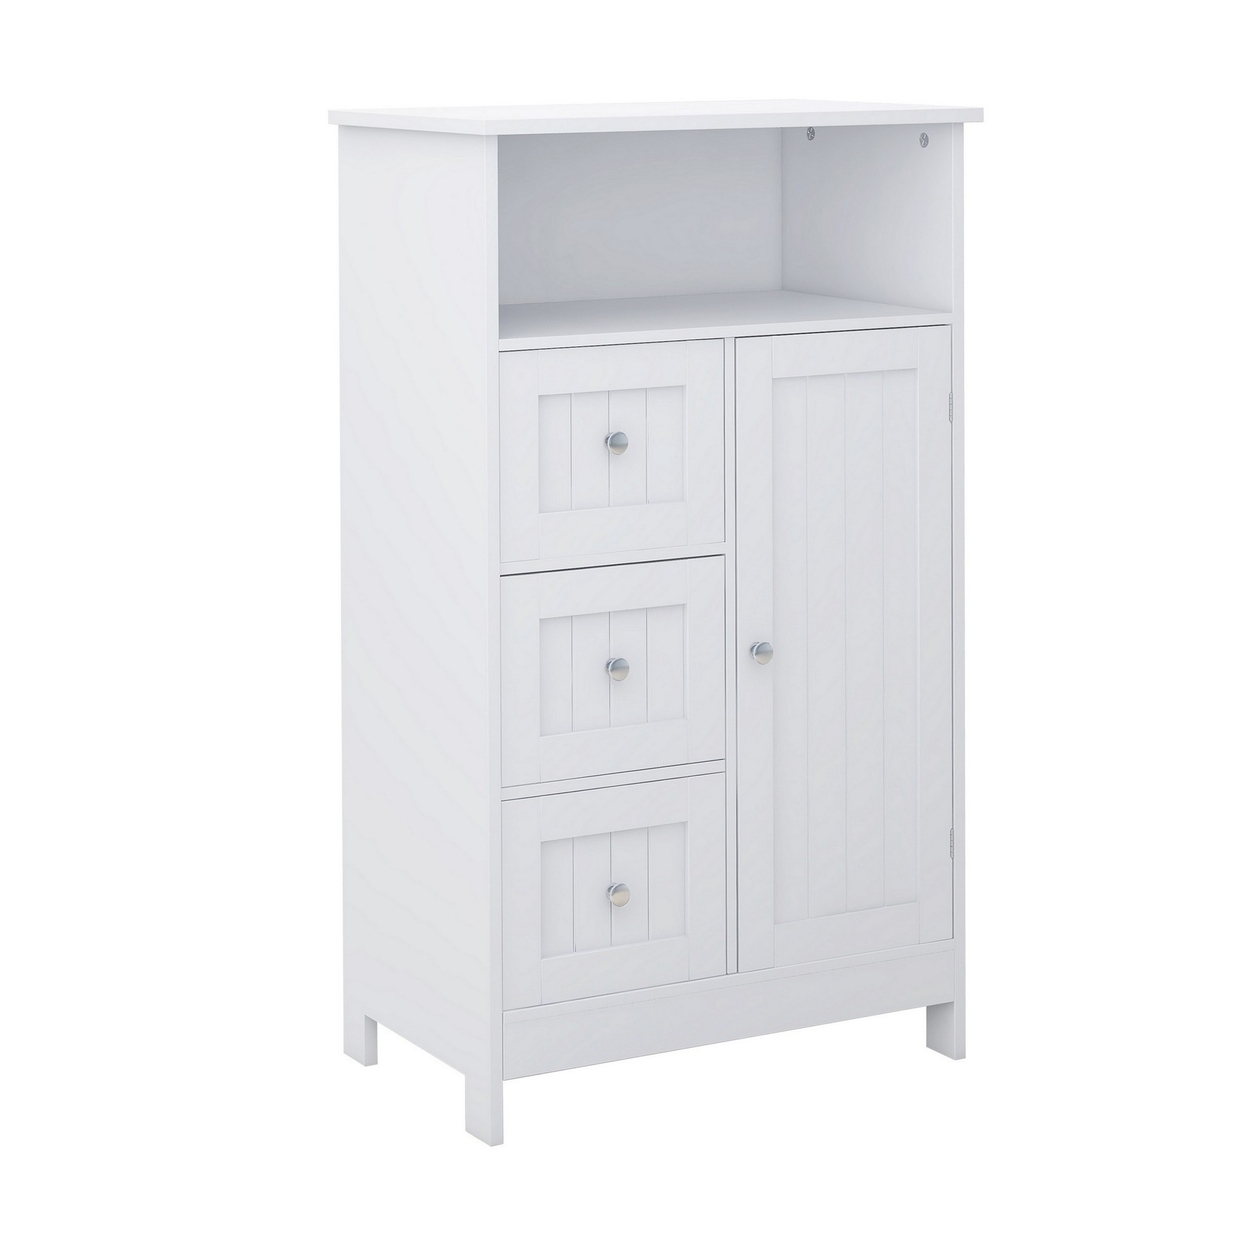 39 Inch Storage Cabinet With 3 Drawers, 1 Open Shelf, Crisp White Finish- Saltoro Sherpi